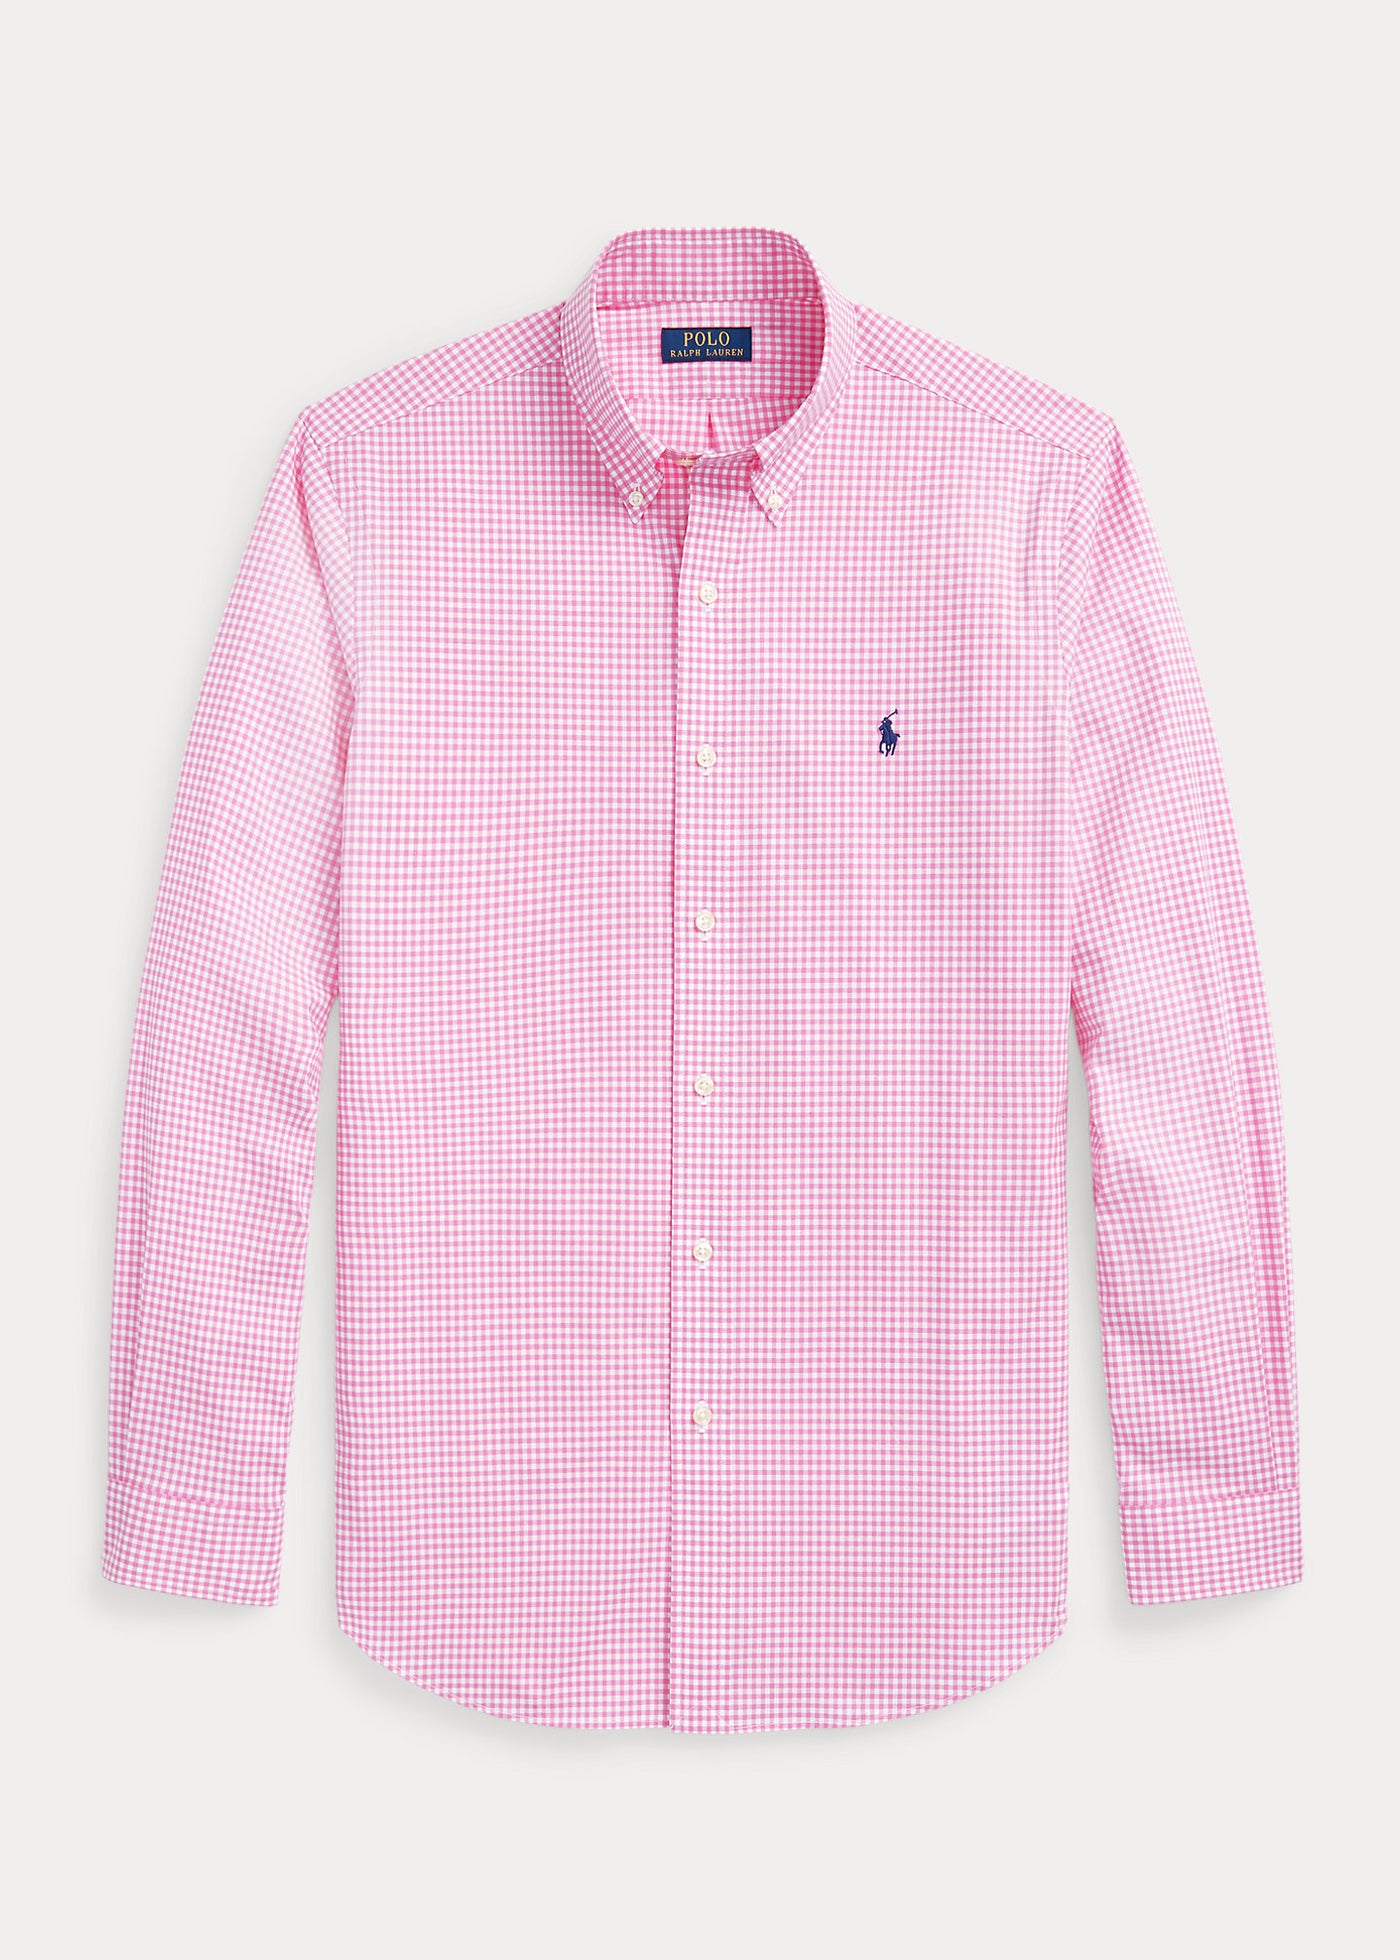 Ralph Lauren Custom Fit Plaid Stretch Poplin Shirt | Resort Rose/White